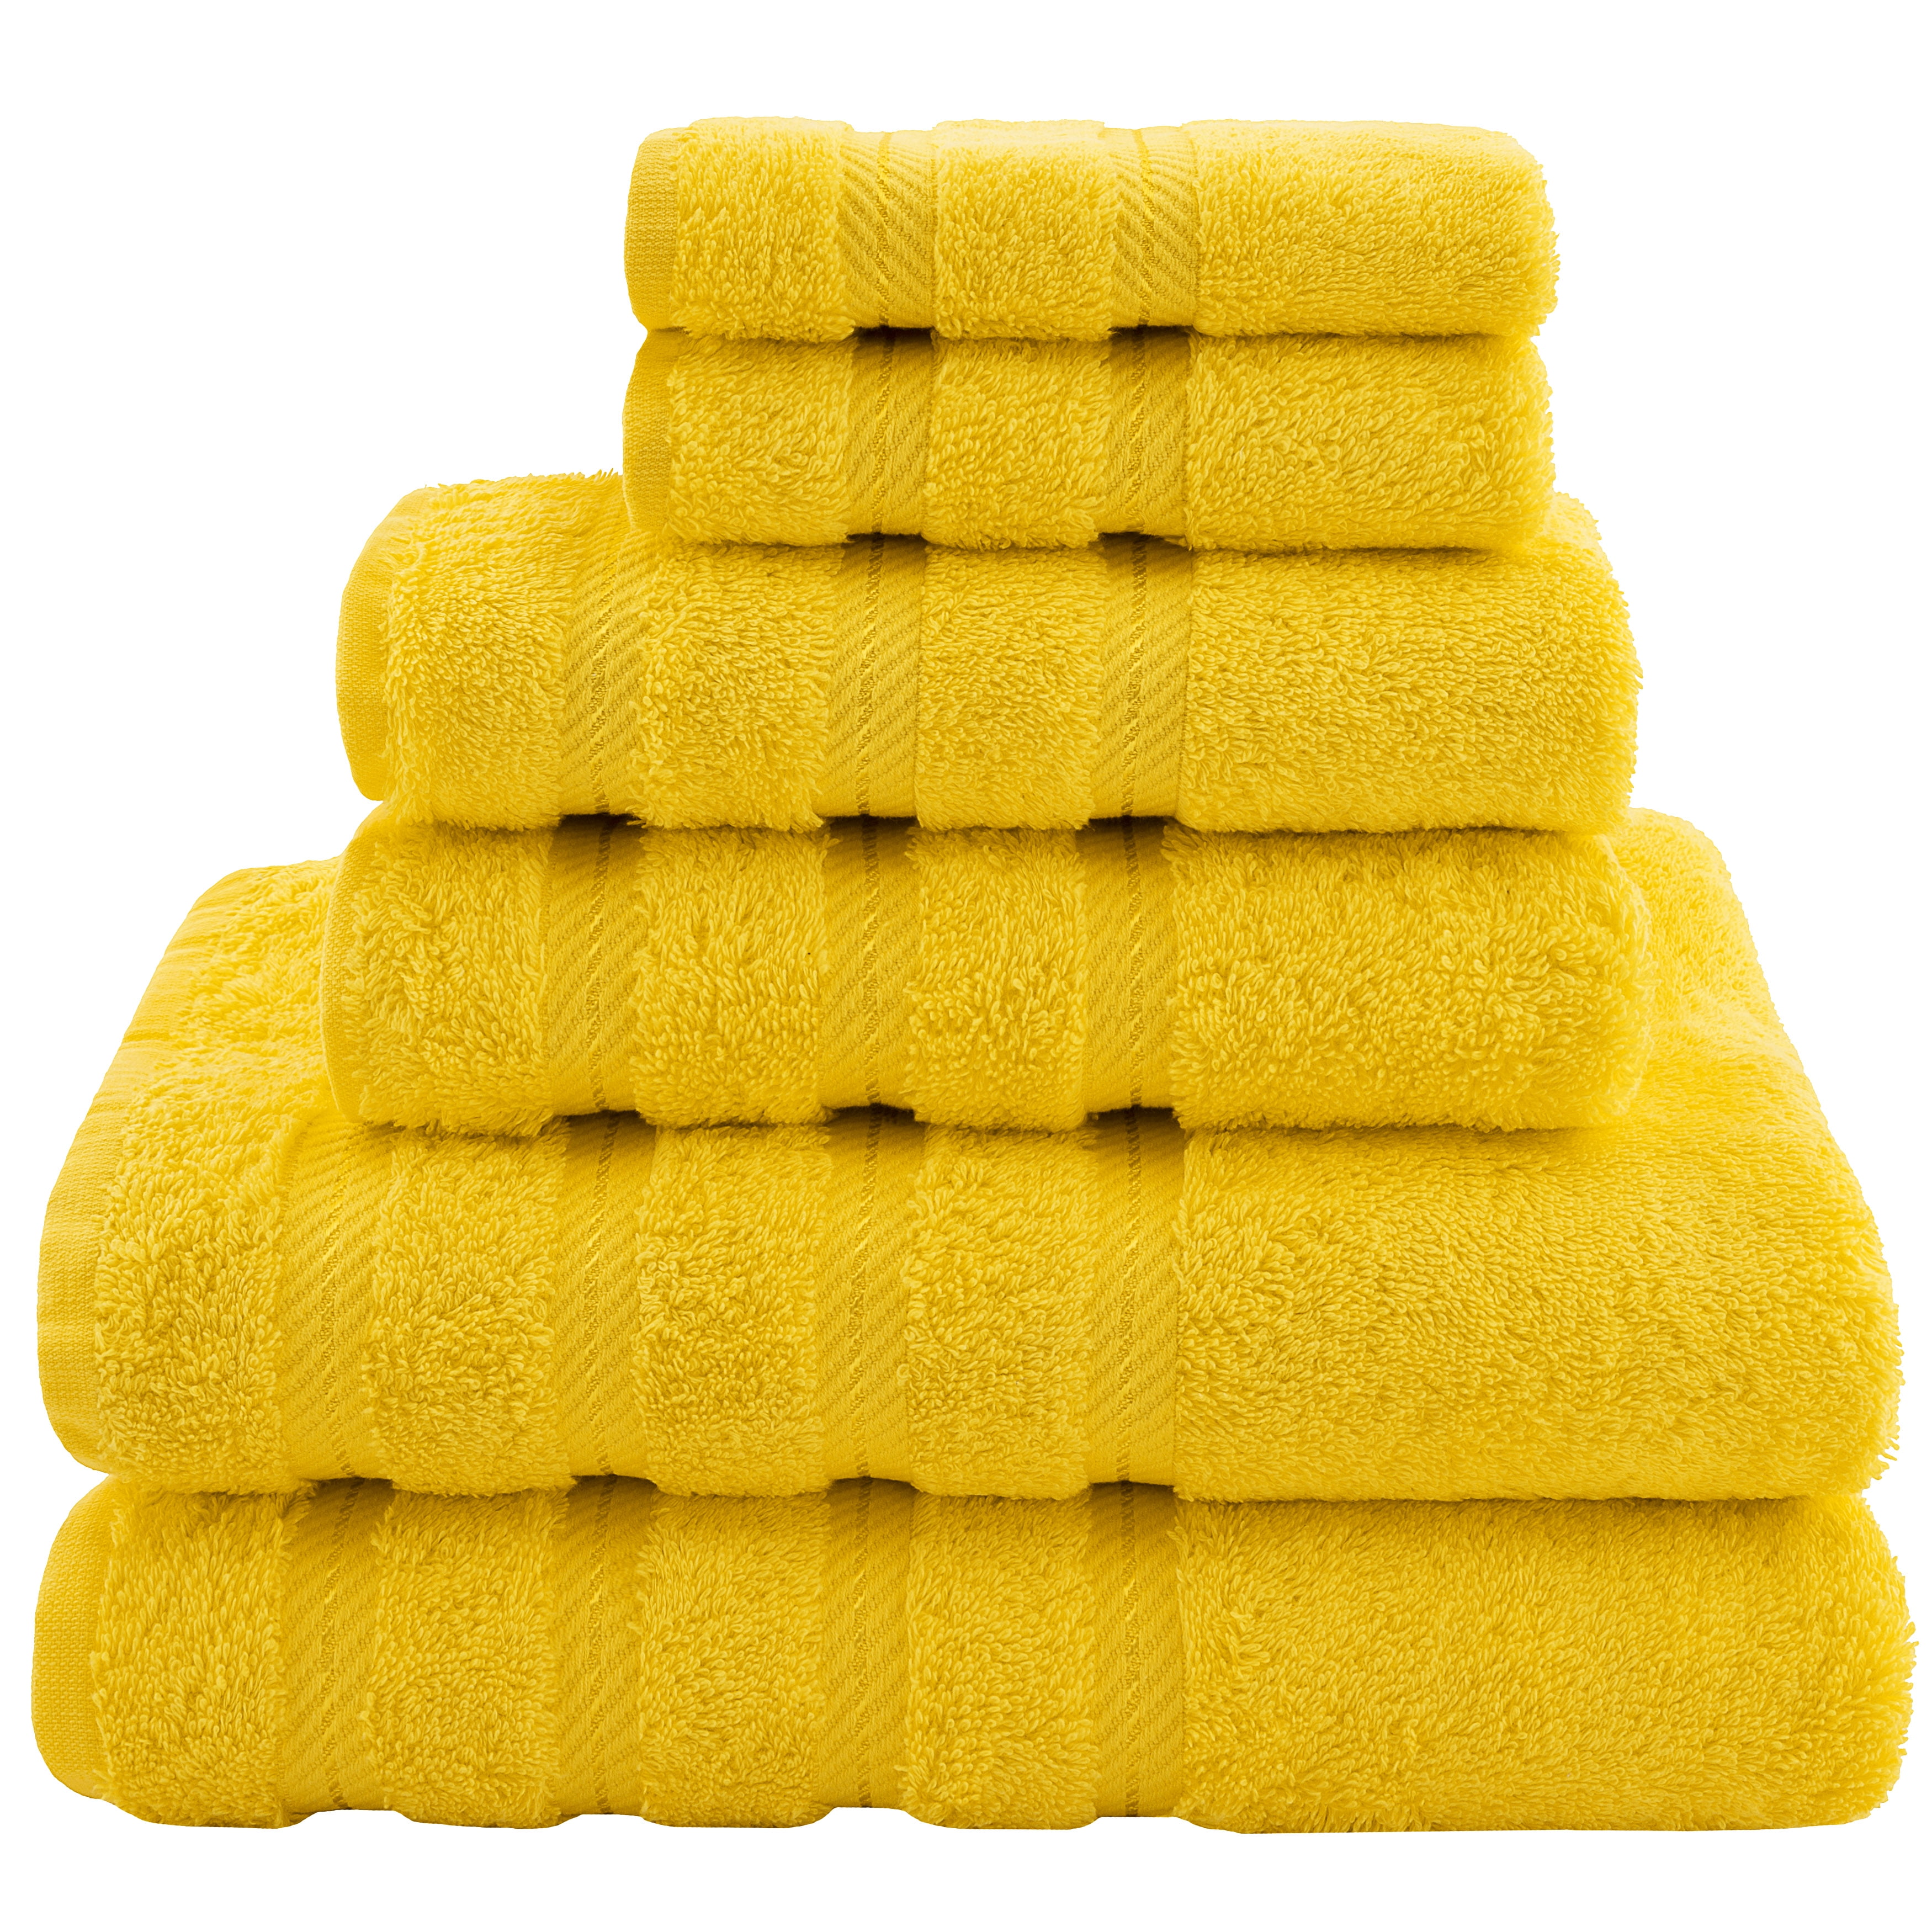 American Soft Linen- Bath Linen Set (6 PC Towel Set, Yellow) 6 PC Towel Set